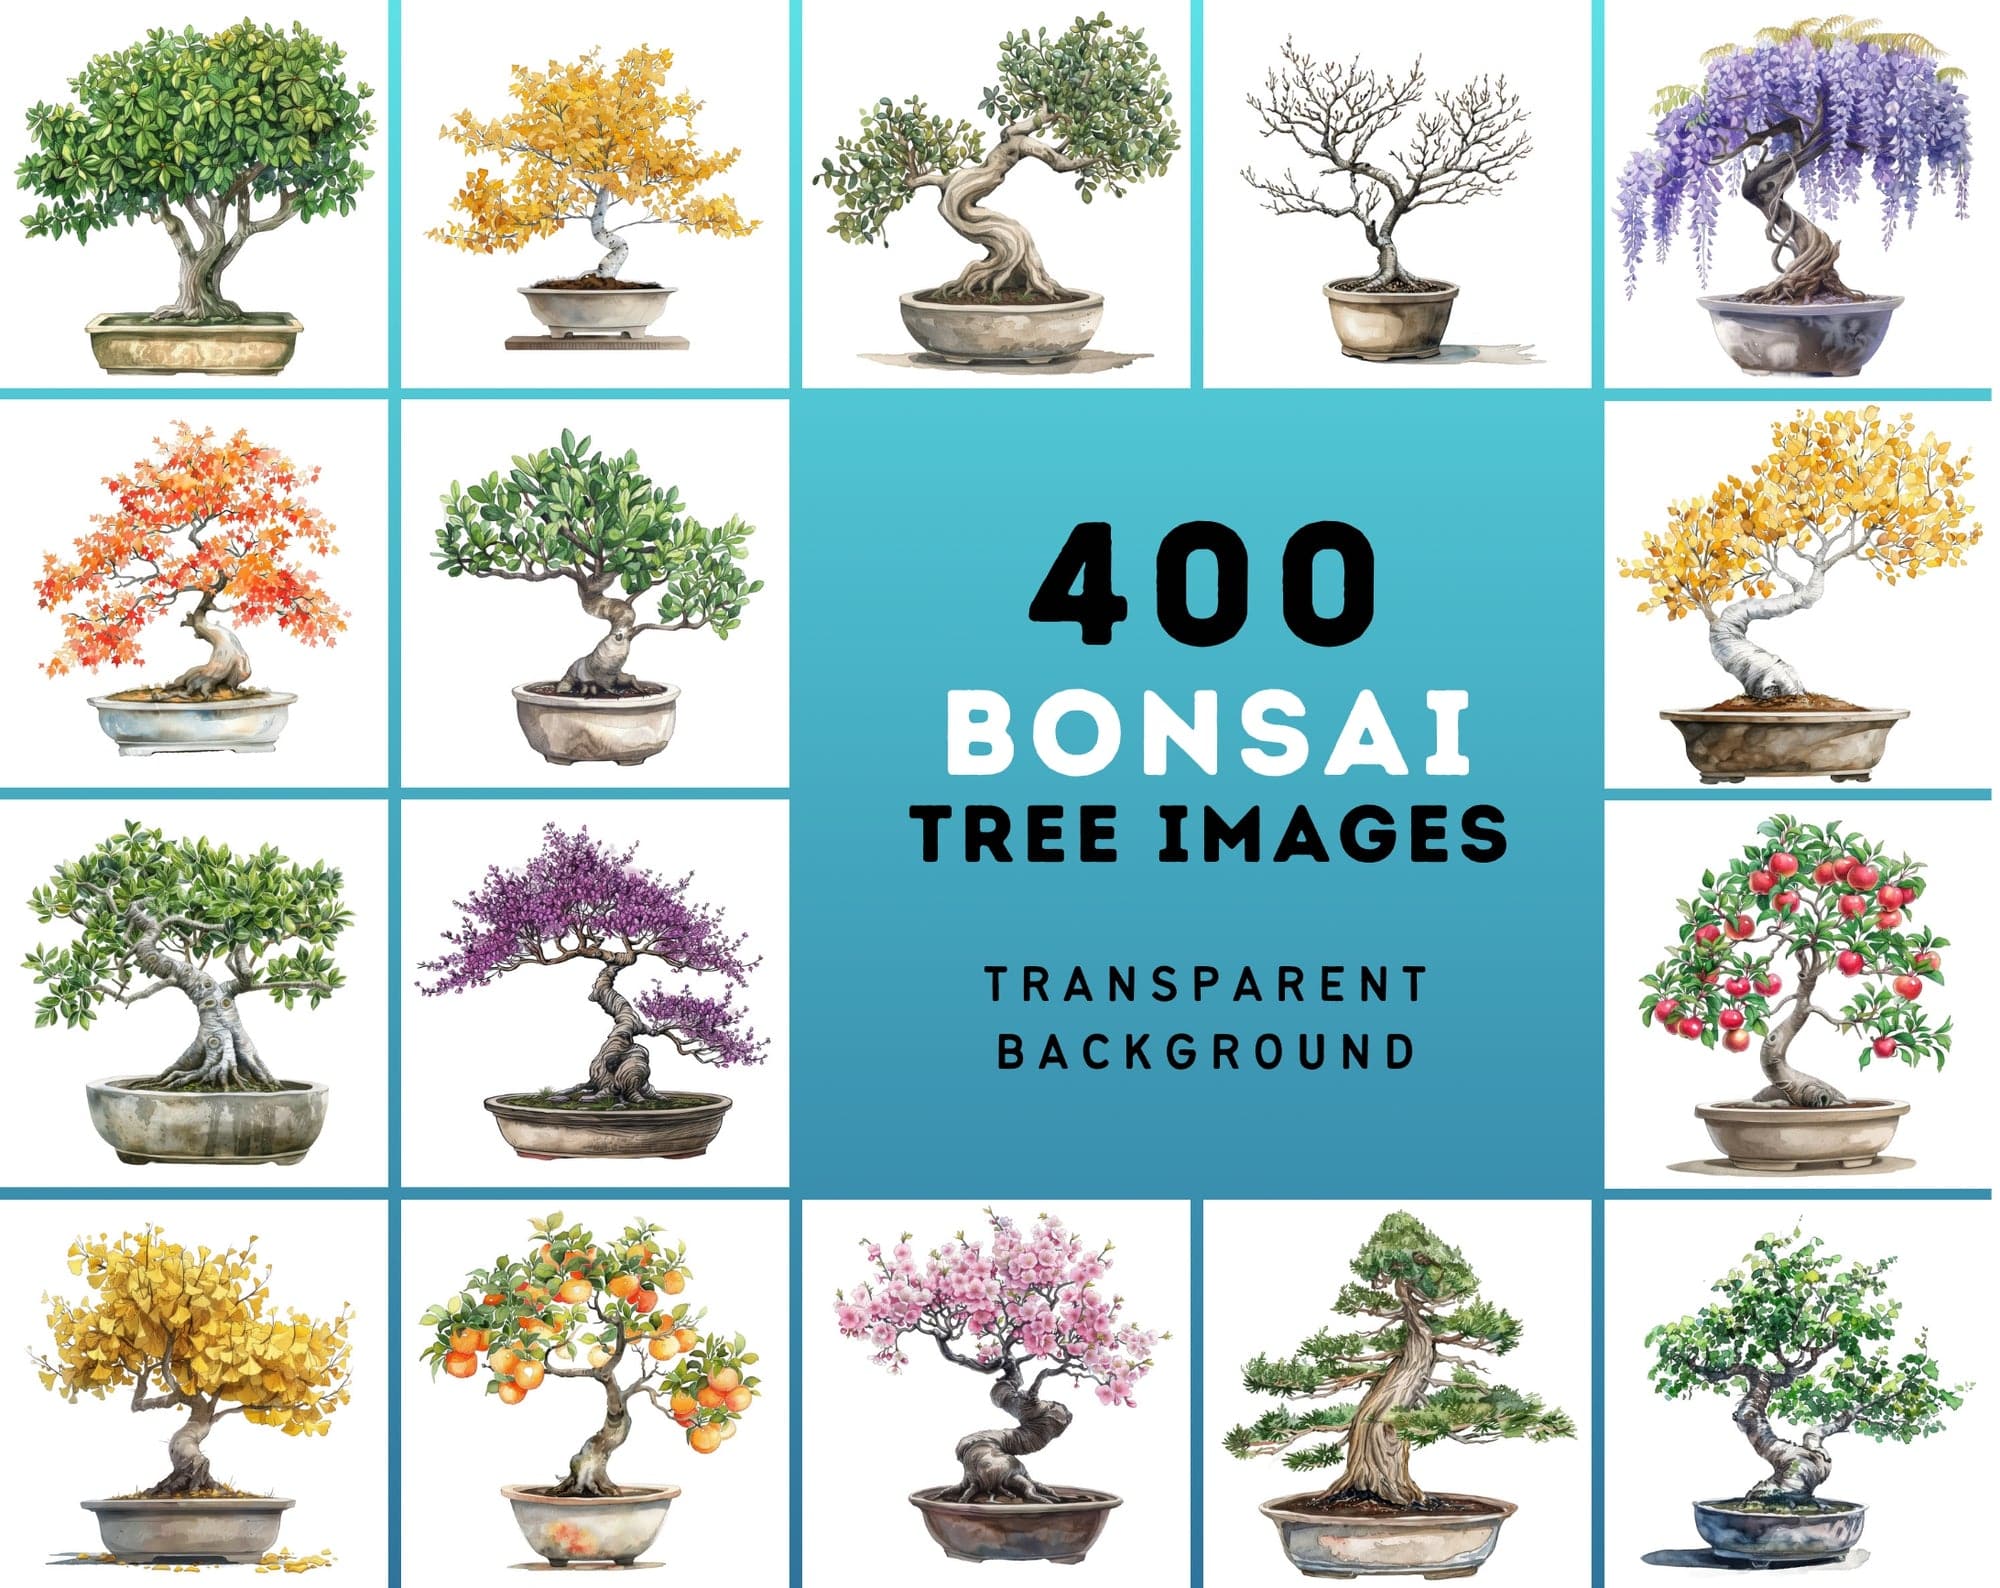 400 Bonsai Tree Images Bundle: High-Quality PNG & JPG, Commercial License - Oak, Cherry Blossom, Pine, Maple, and More Digital Download Sumobundle